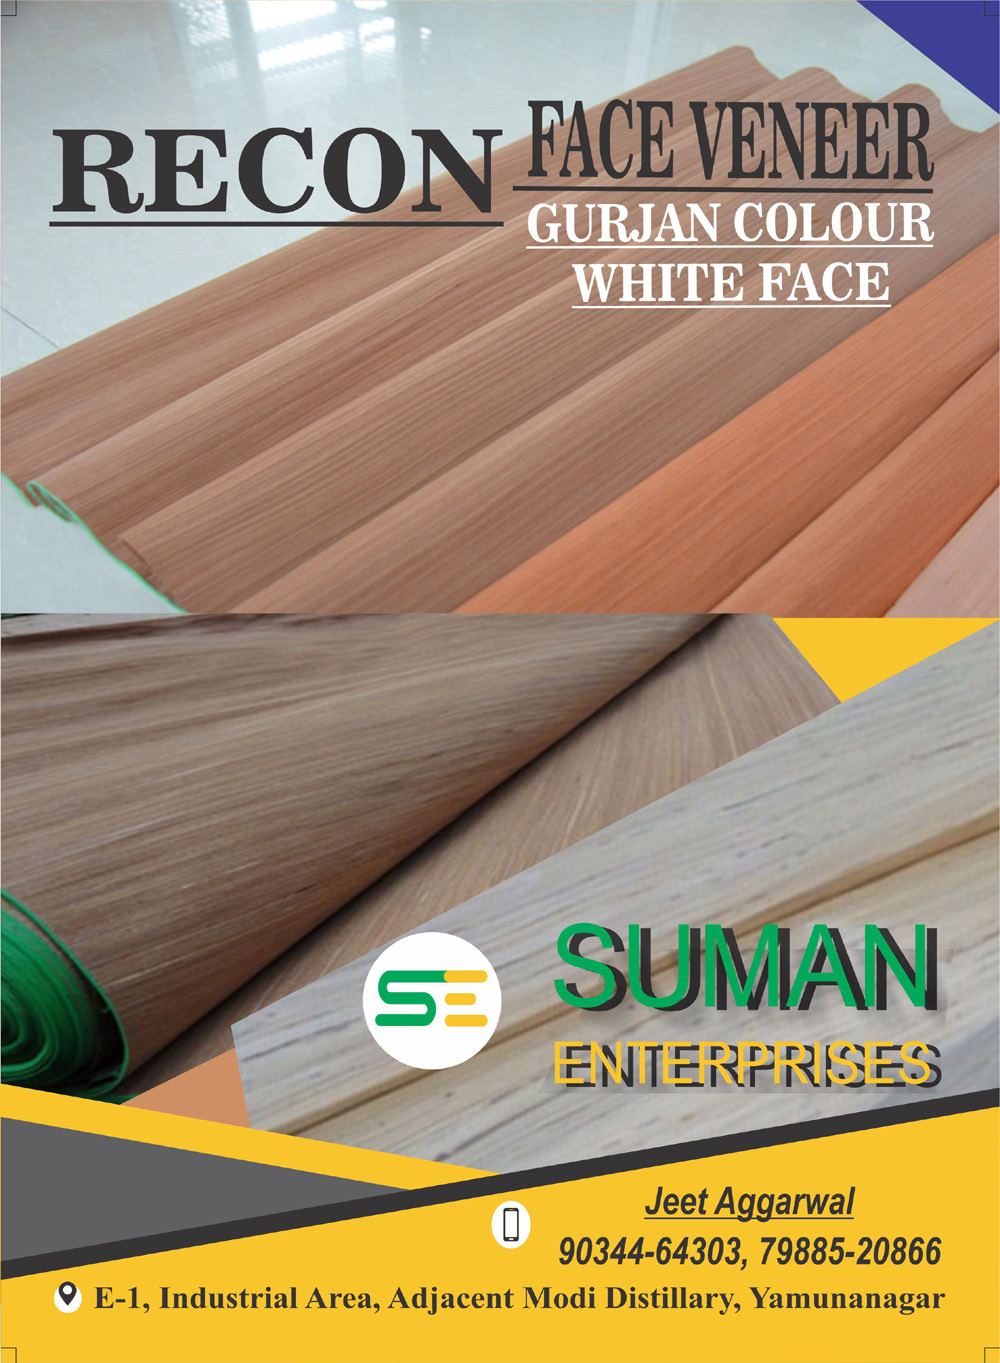 Suman Enterprises